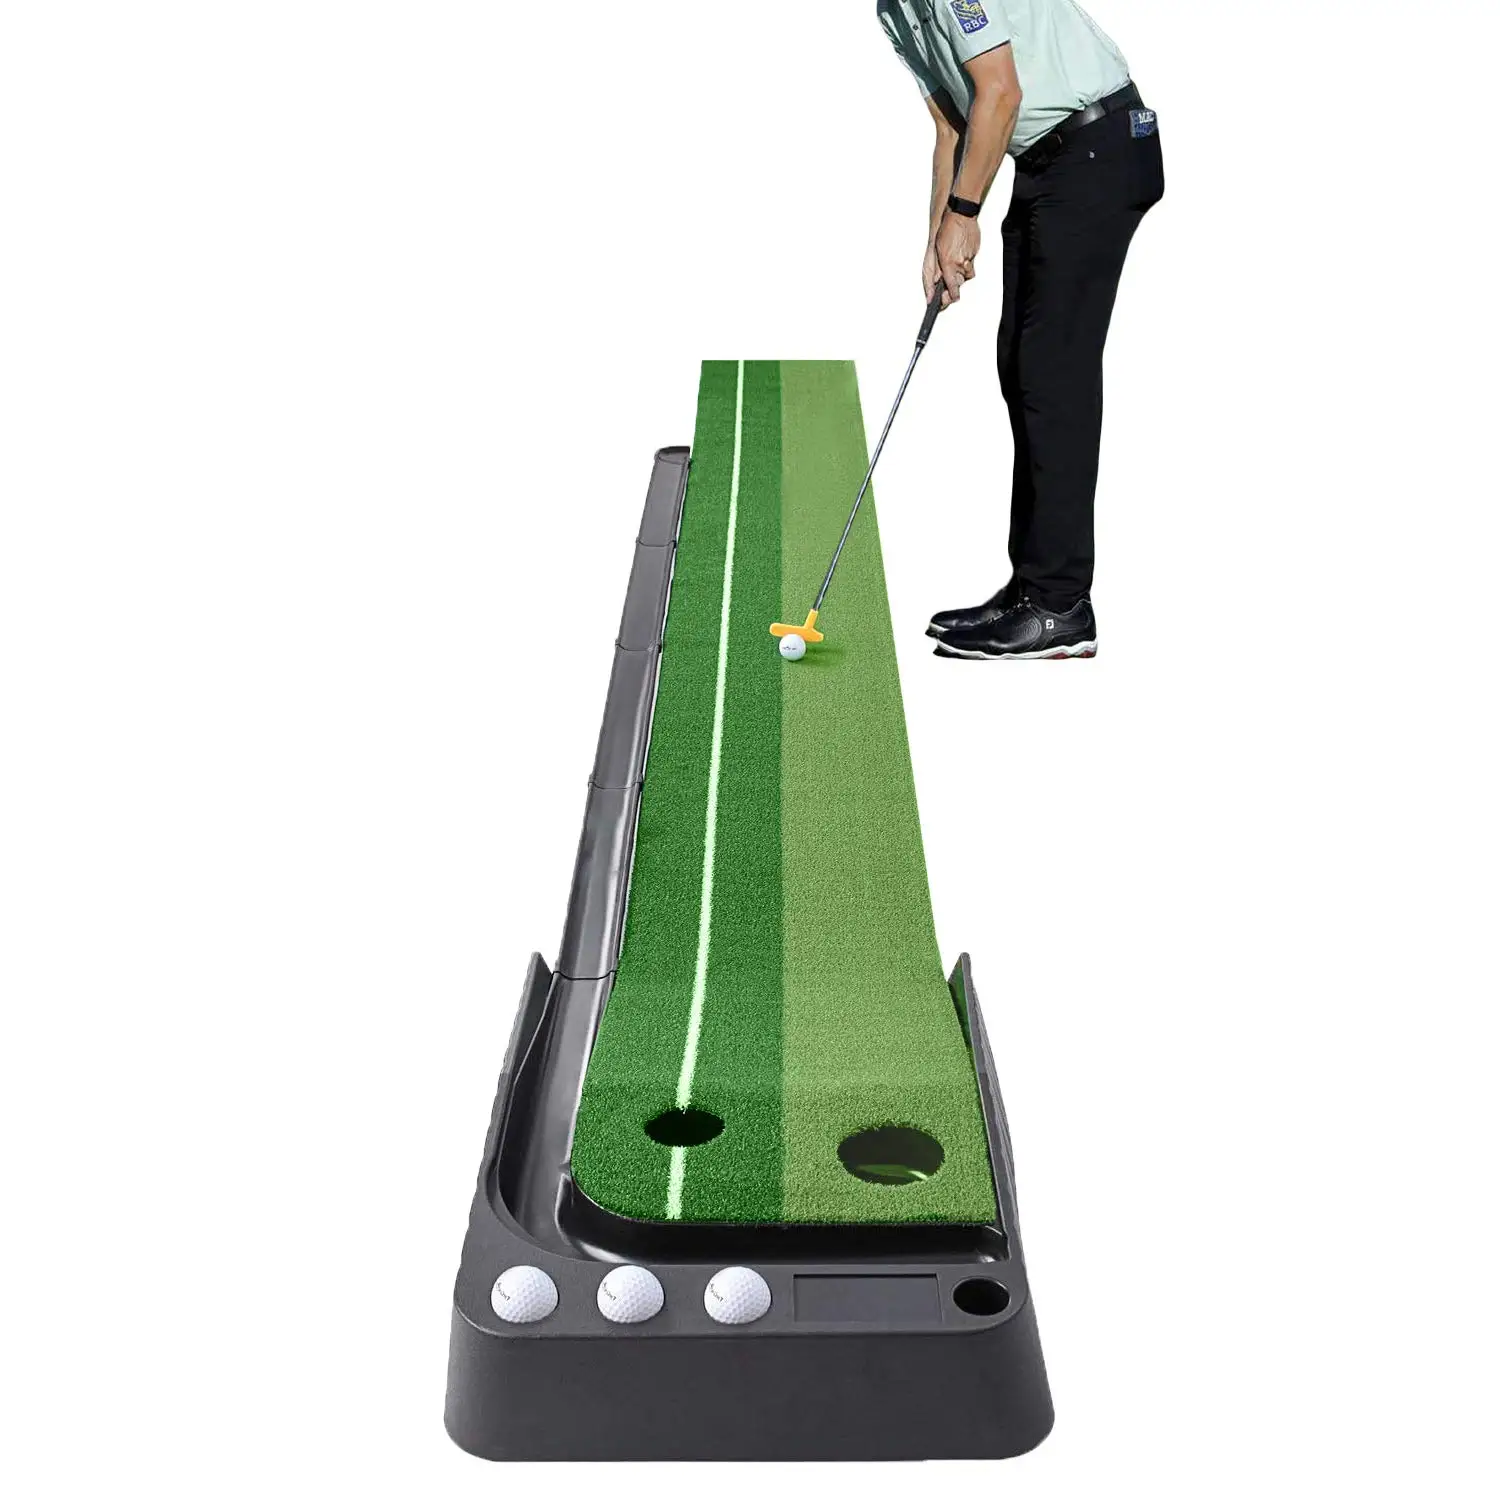 

Golf Putting Mat Indoor Putting Green with Ball Return Including 3 Training Balls-9.84ft Long Golf Game Carpet Simulator